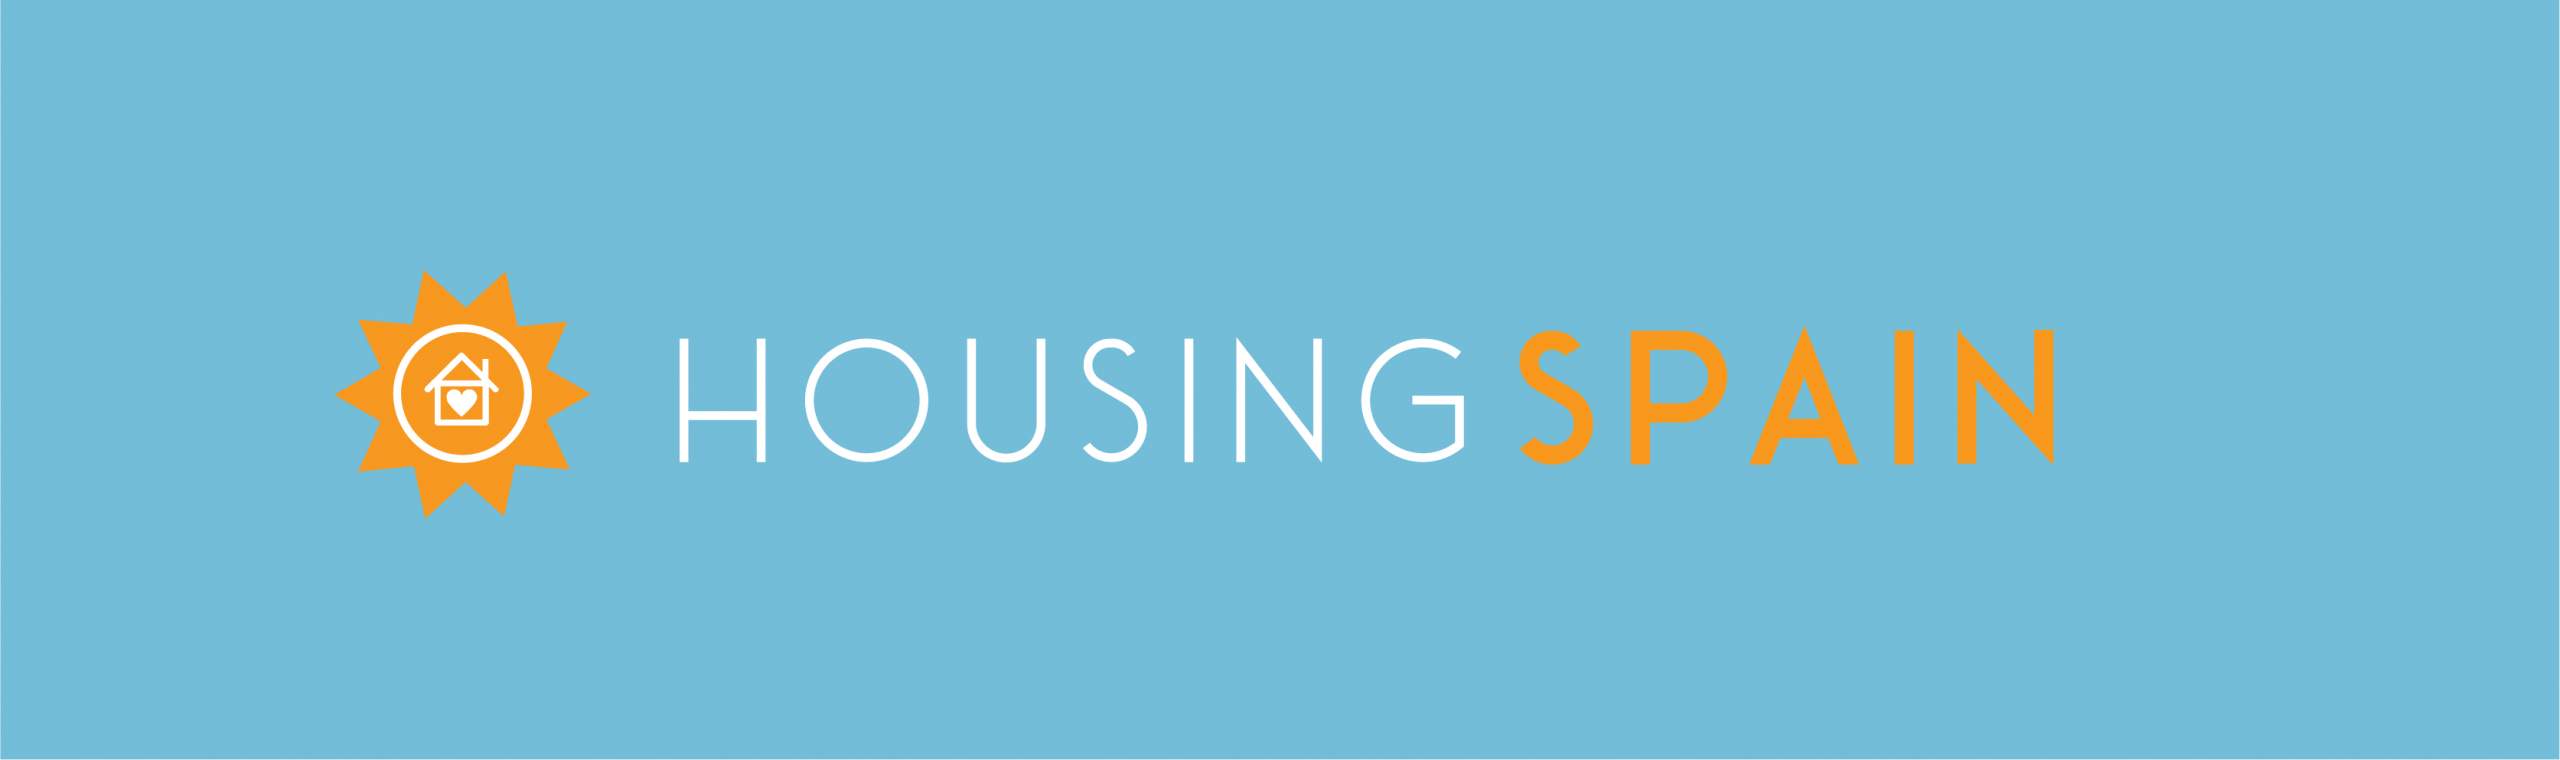 Housing Spain logo